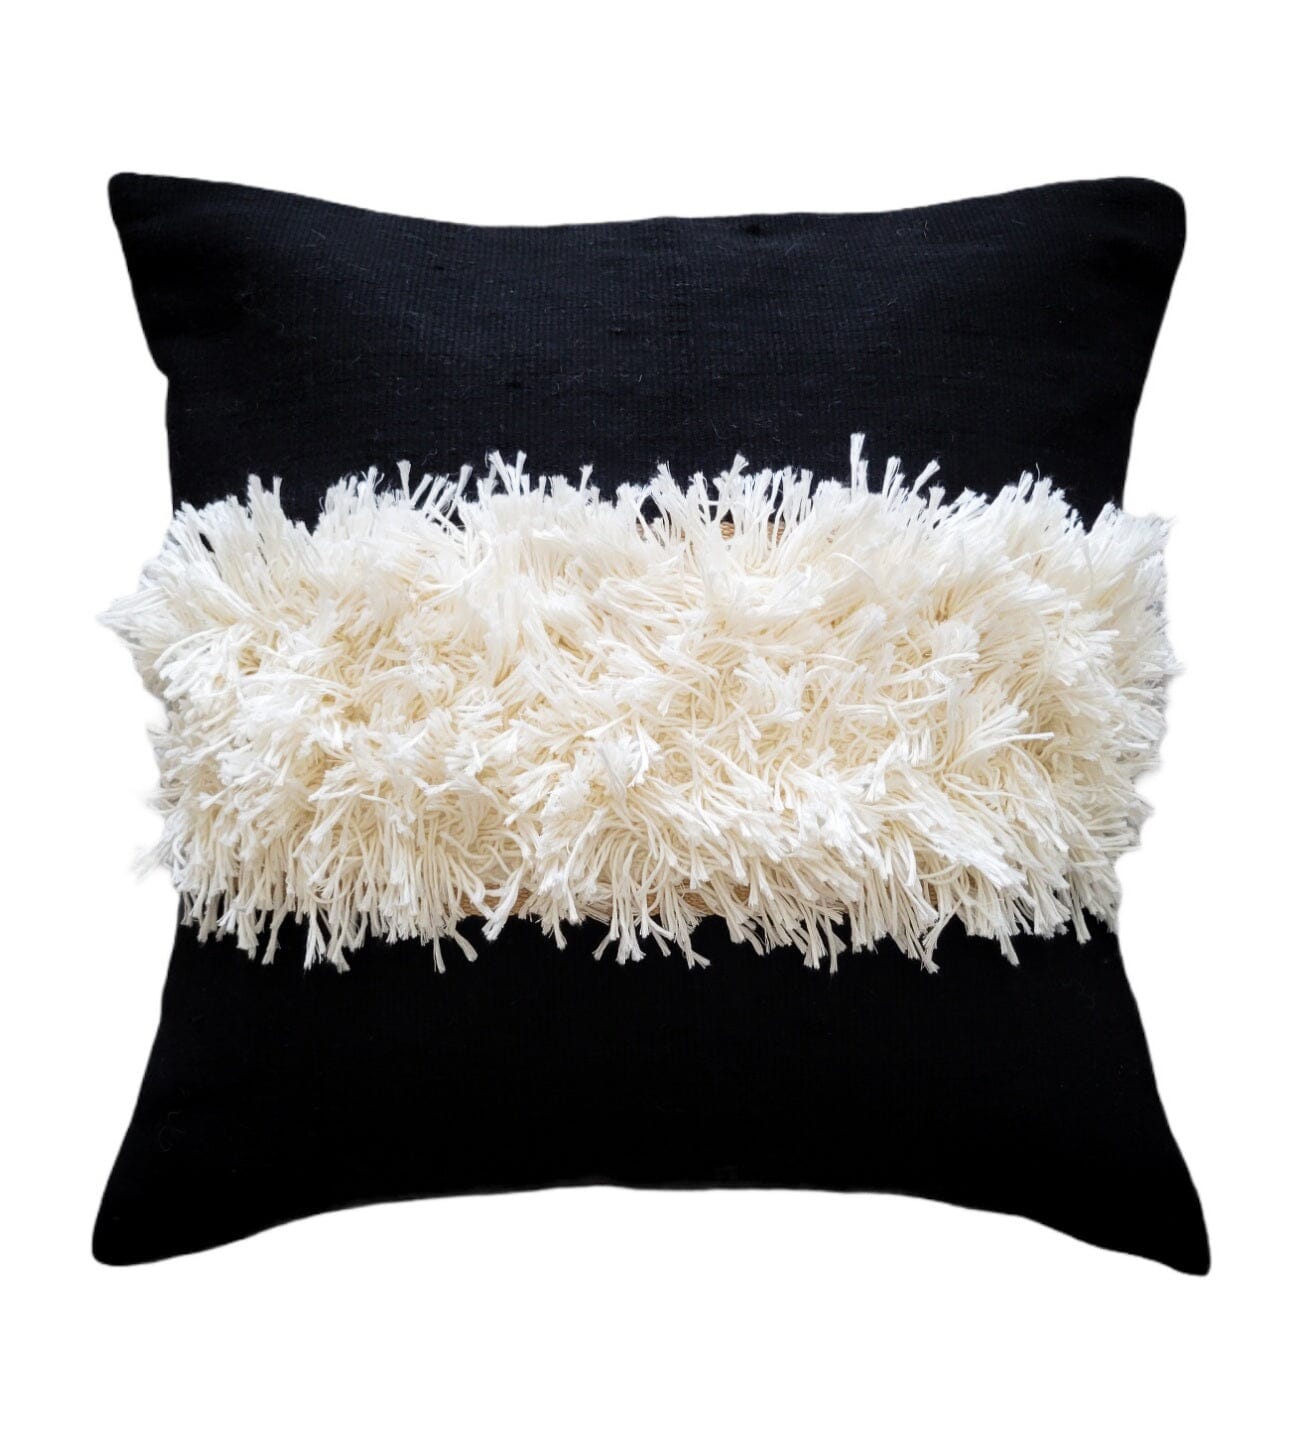 Riya Handwoven Cotton Decorative Throw Pillow Cover